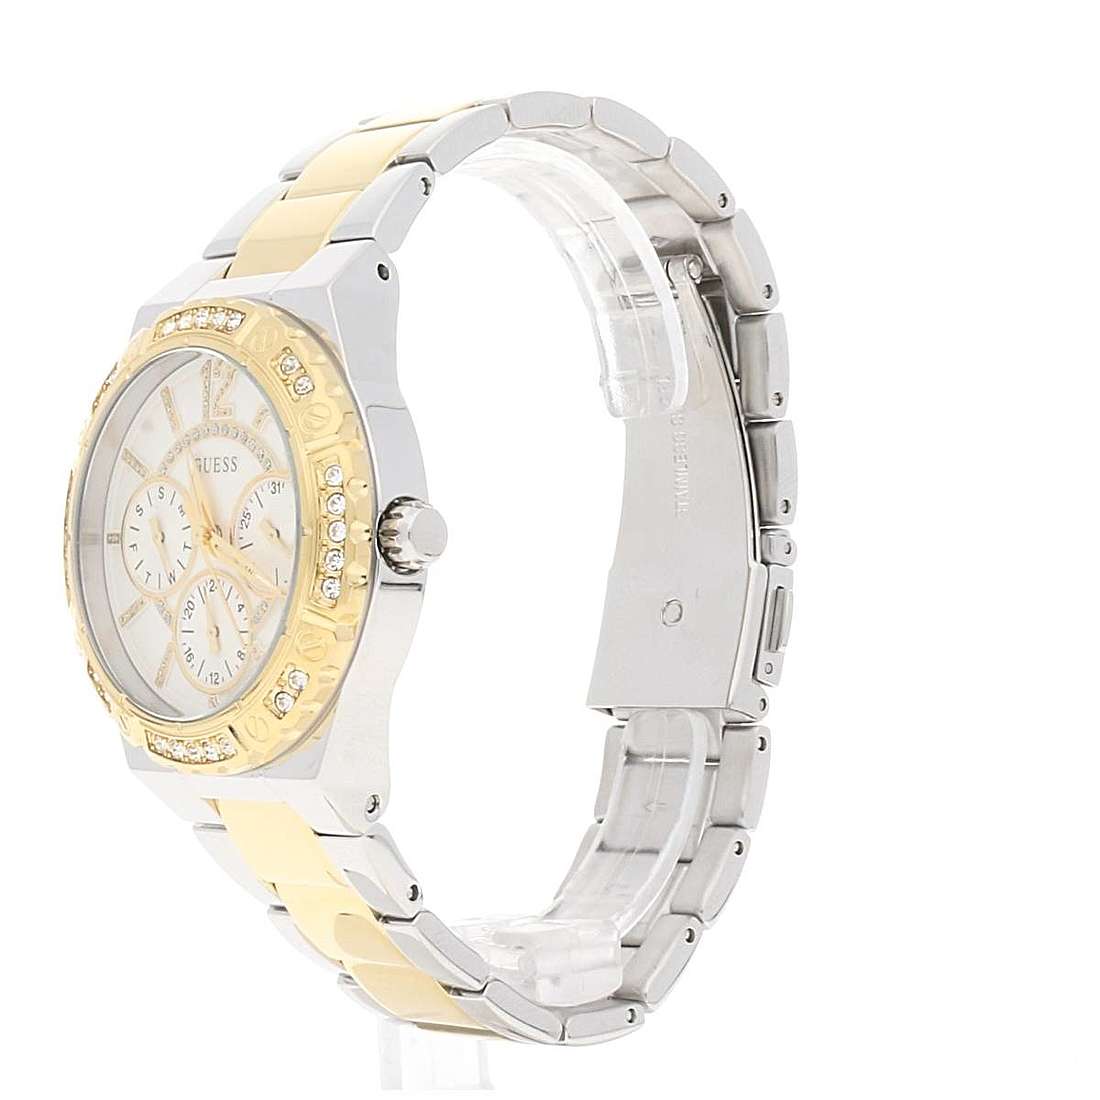 Guess Usa Modell Armbanduhr Damenuhr Uhr Schmetterling